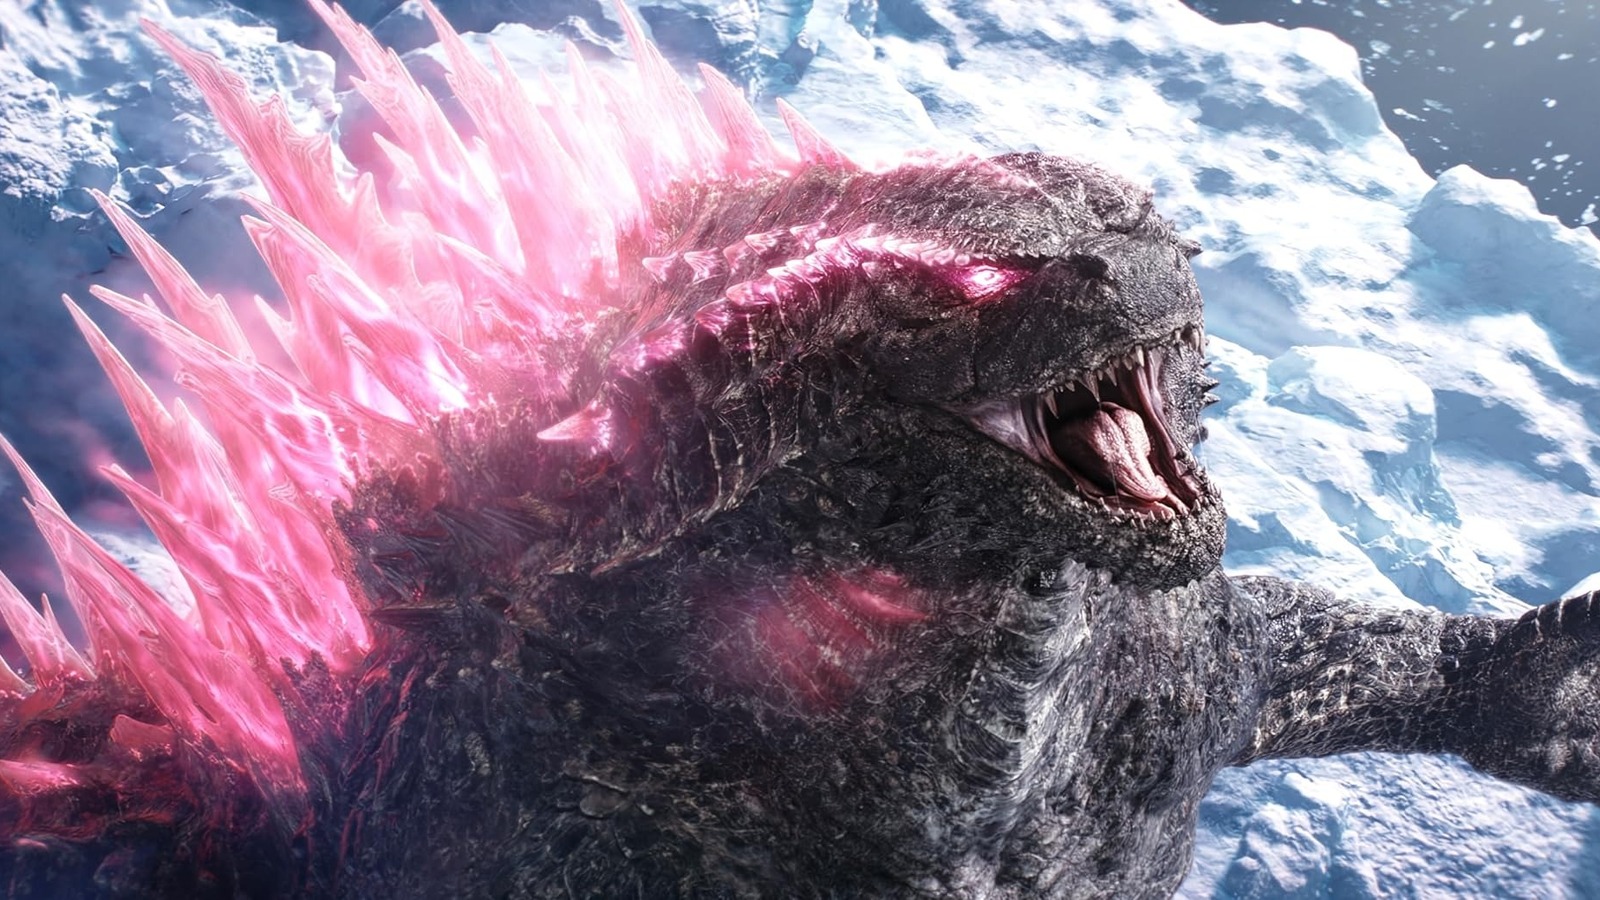 Why Godzilla X Kong Director Adam Wingard Gave Godzilla An ‘Orgasmic’ Pink Makeover